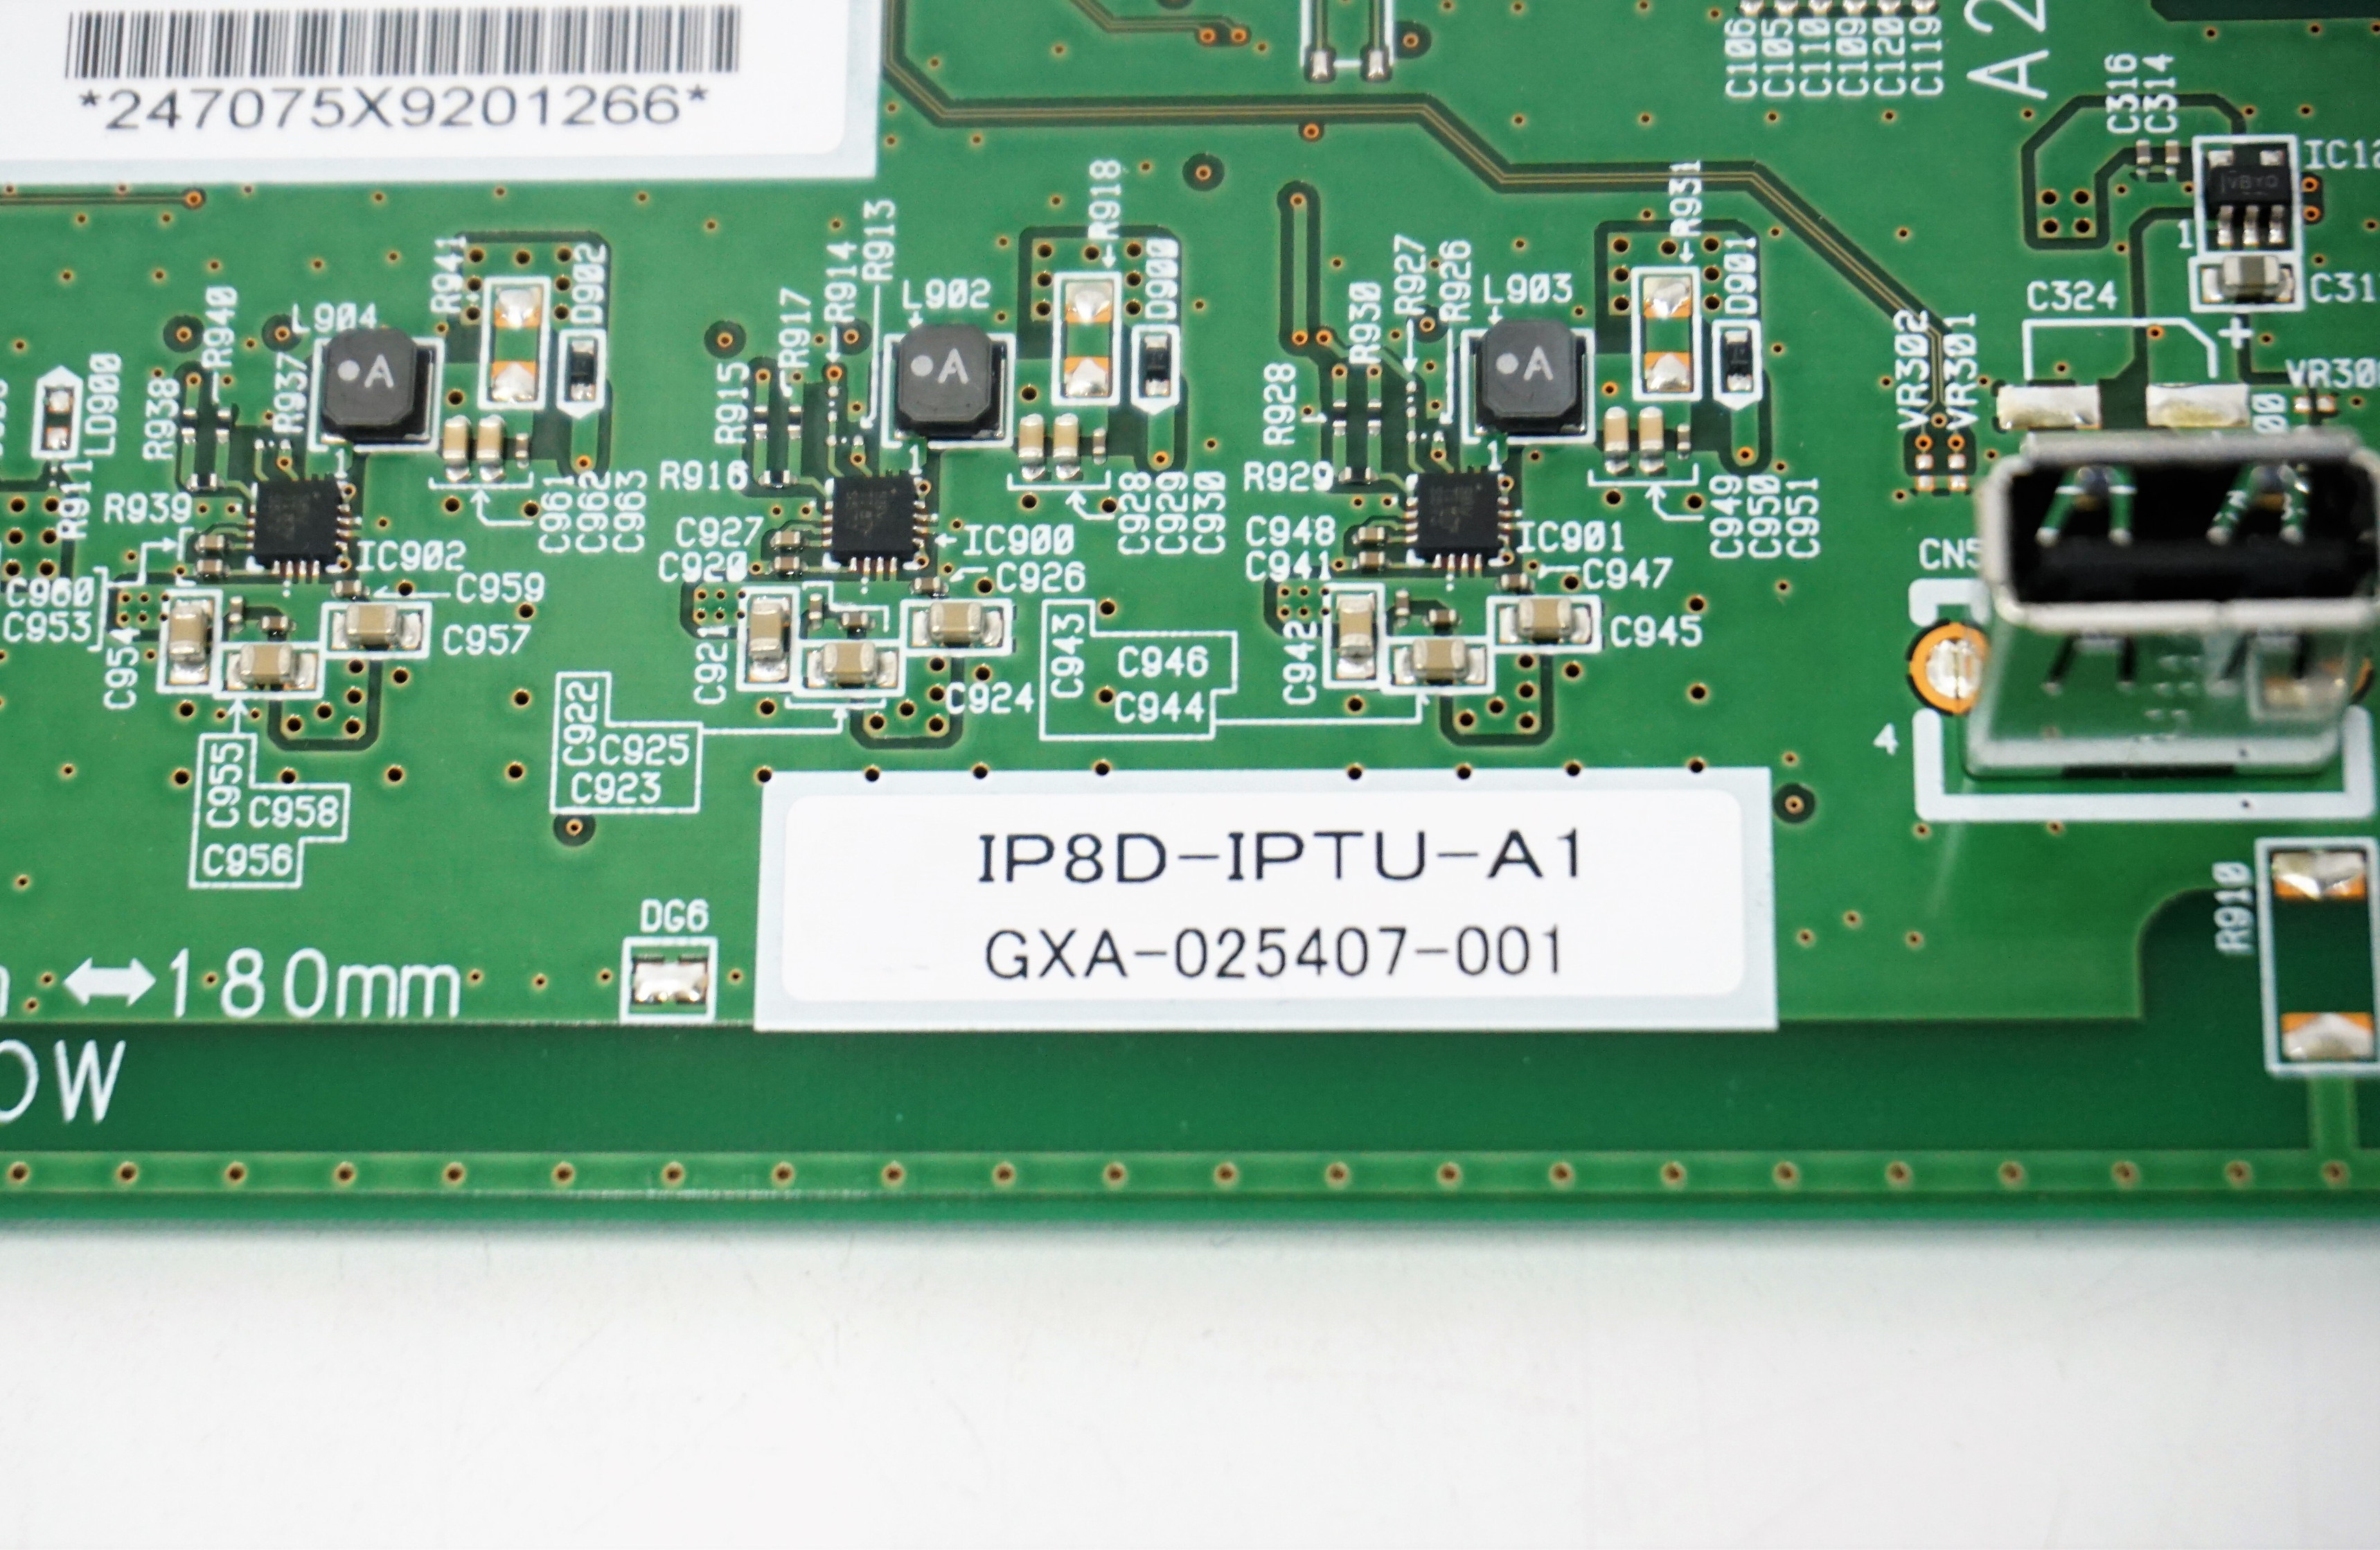 IP8D-IPTU-A1　NEC製 基板 AspireWX　　4ch IP局線ユニット　(アスパイアダブルエックス)